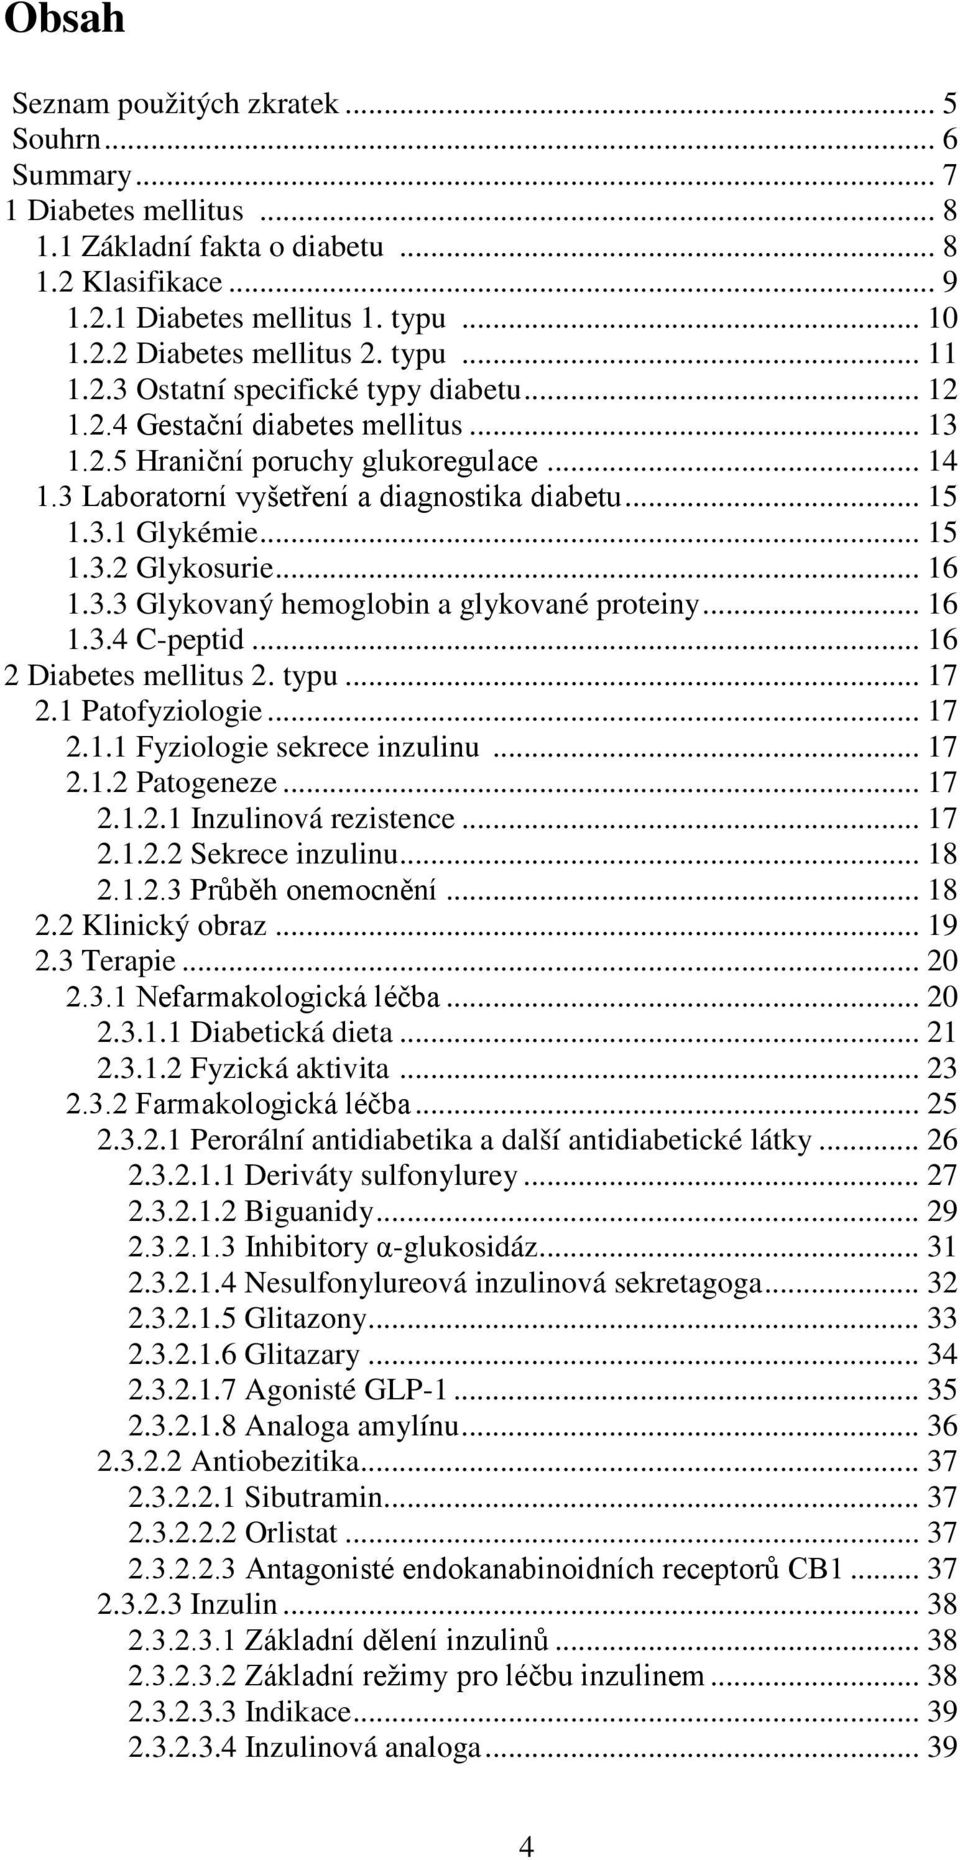 .. 15 1.3.2 Glykosurie... 16 1.3.3 Glykovaný hemoglobin a glykované proteiny... 16 1.3.4 C-peptid... 16 2 Diabetes mellitus 2. typu... 17 2.1 Patofyziologie... 17 2.1.1 Fyziologie sekrece inzulinu.